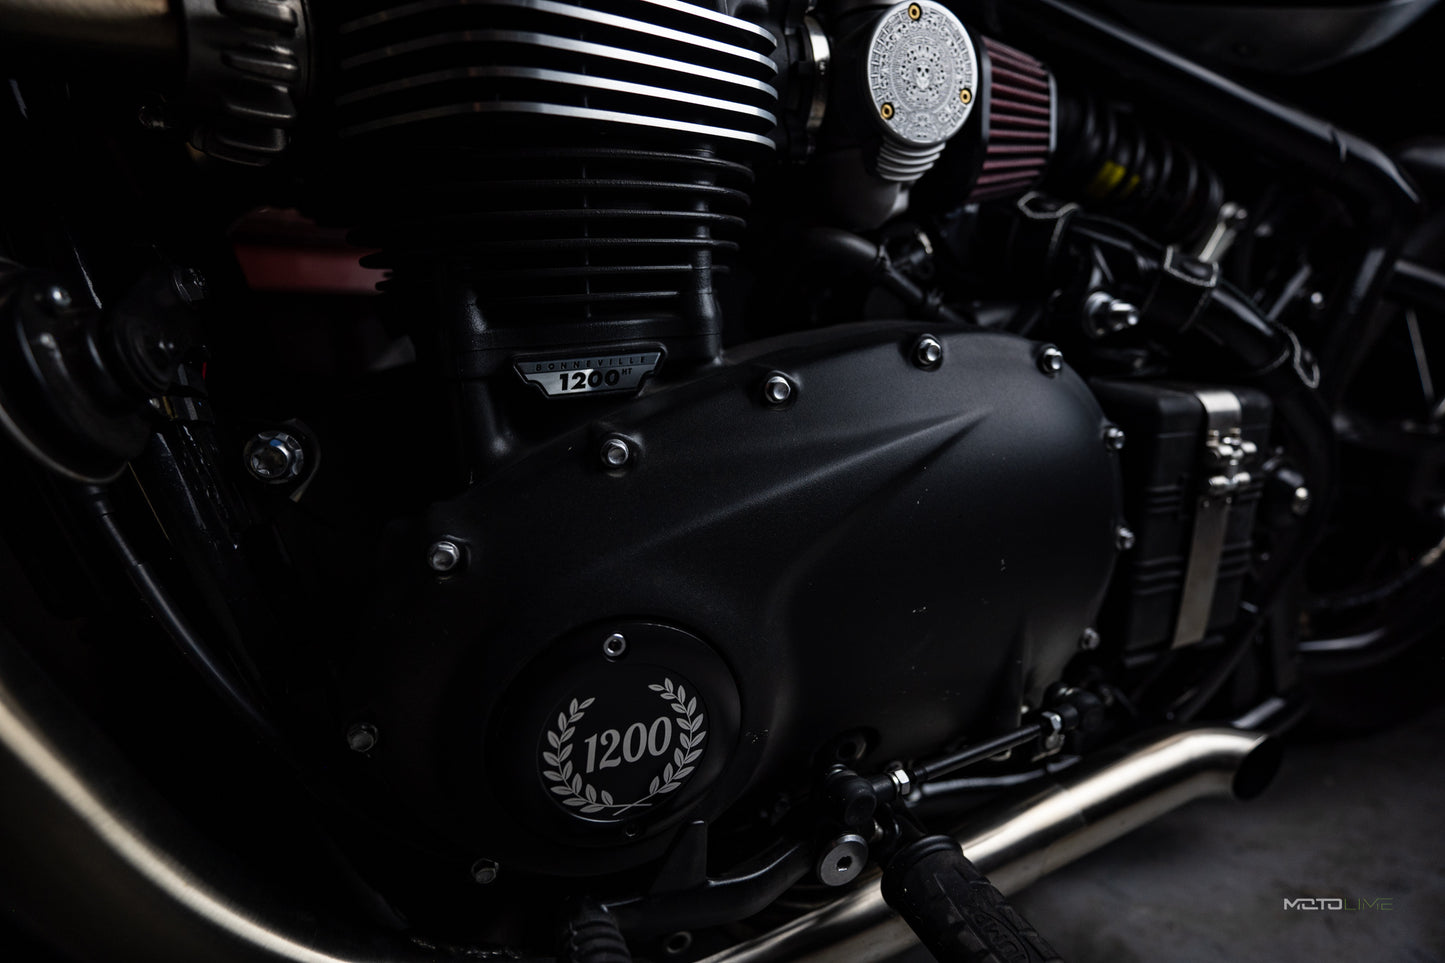 1200 Black - Triumph engine cover